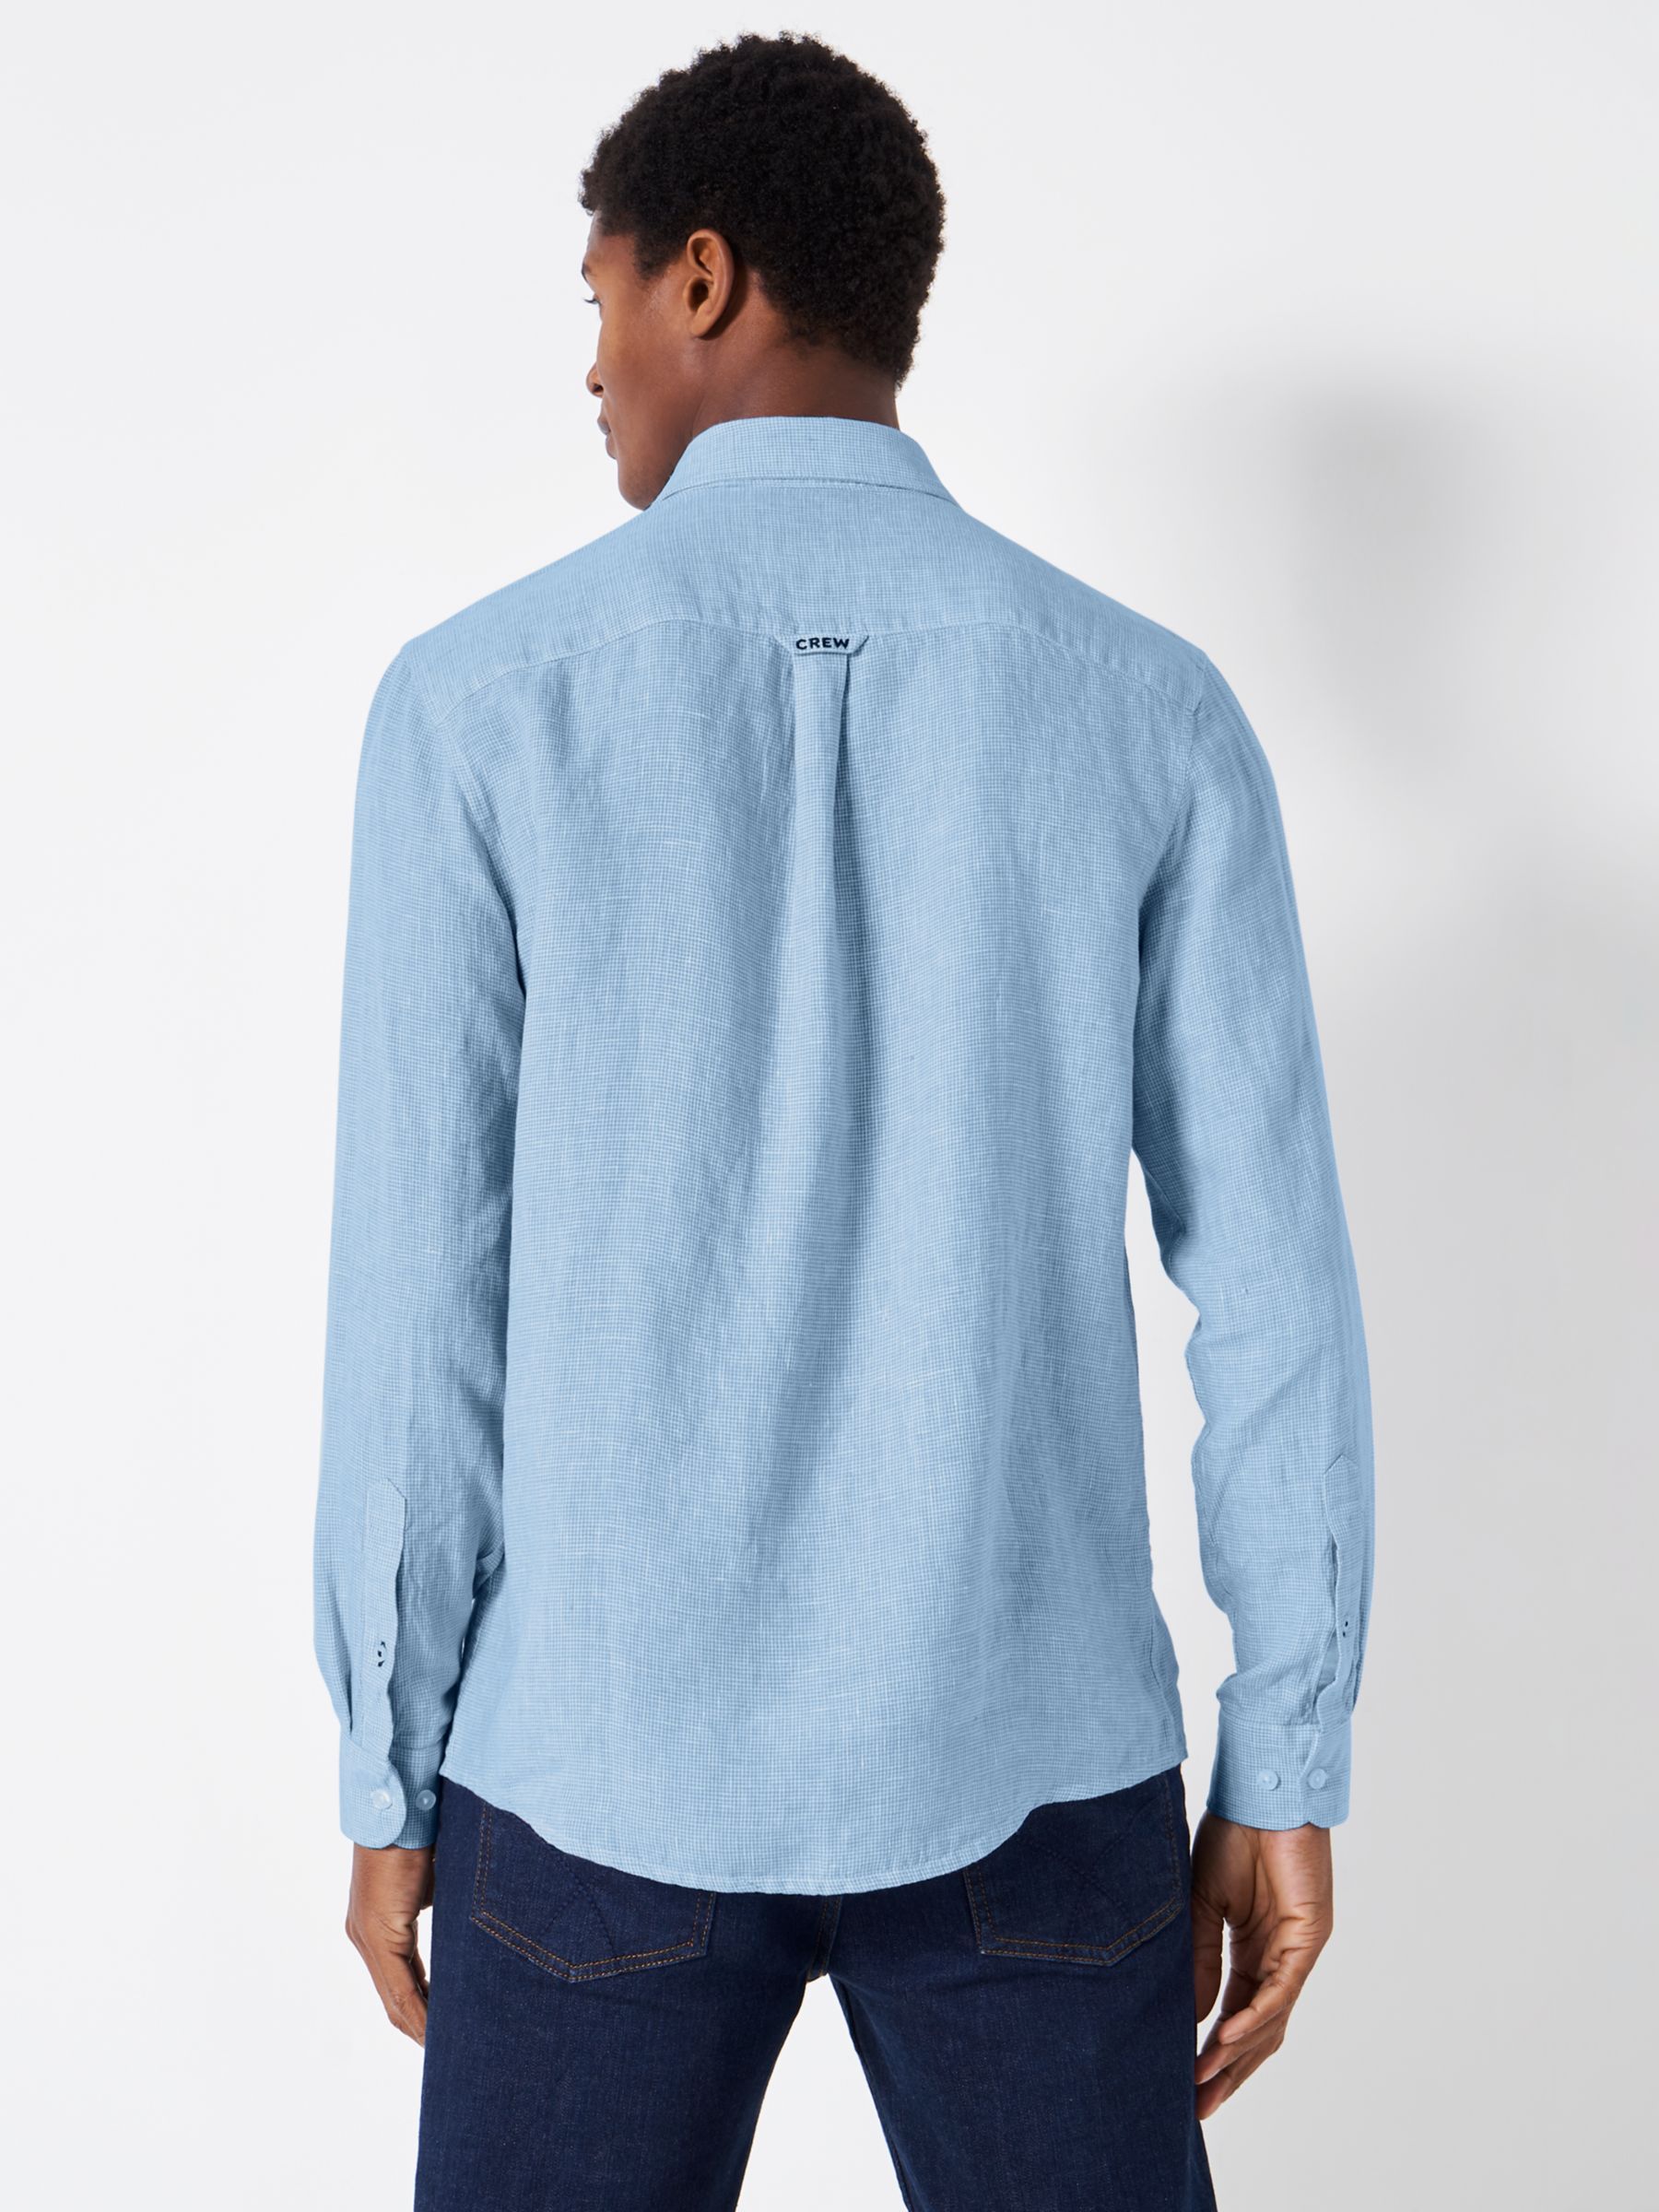 Crew Clothing Long Sleeve Linen Shirt, Light Blue at John Lewis & Partners